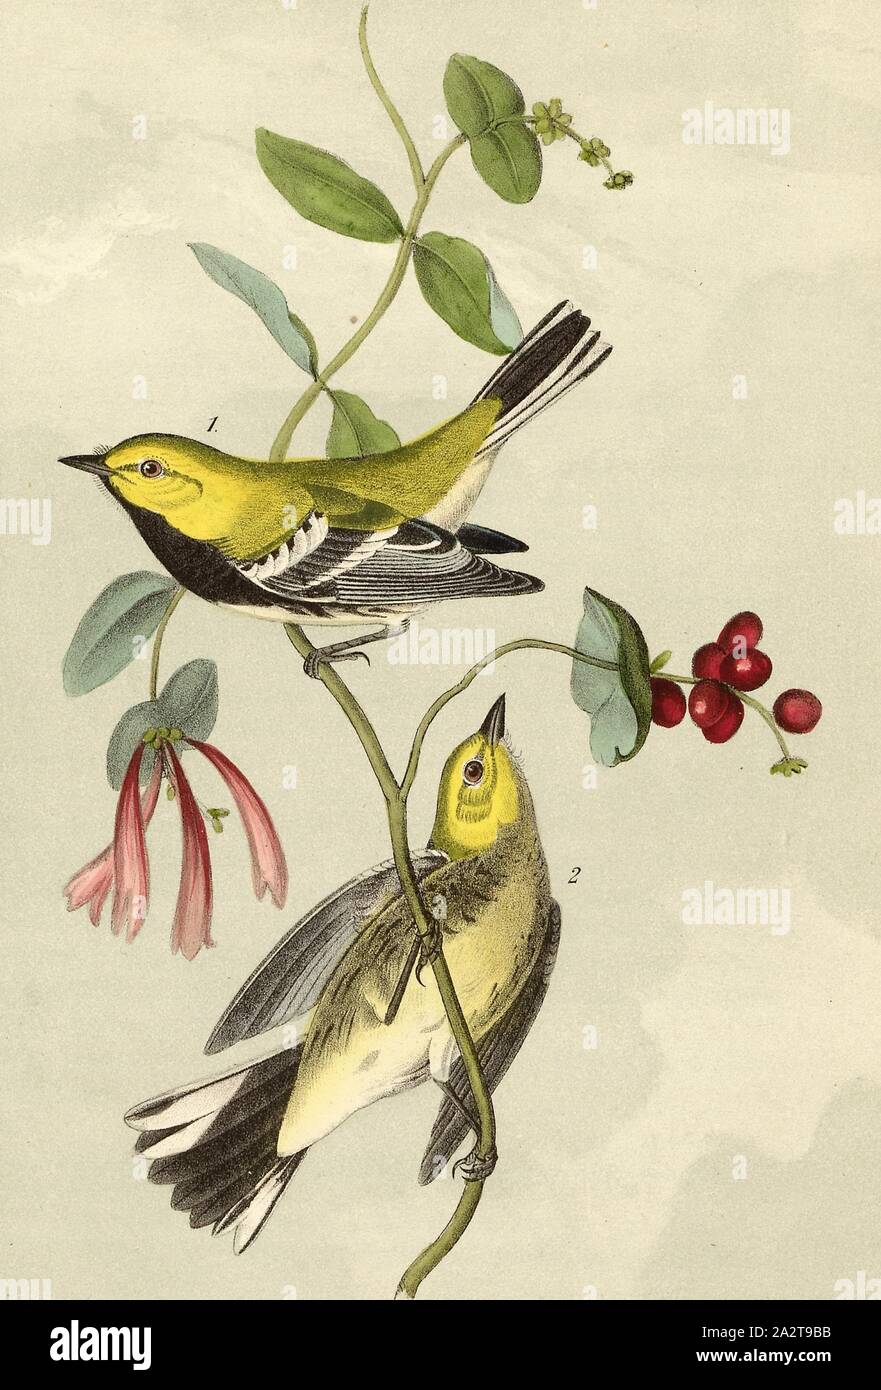 Black-throated Green Wood Warbler - Caprifolium Sempervireous, Greensland Warbler (Dendroica virens, Sylvicola virens), Signed: J.J. Audubon, J.T. Bowen, lithograph, Pl. 84 (vol. 2), Audubon, John James (drawn); Bowen, J. T. (lith.), 1856, John James Audubon: The birds of America: from drawings made in the United States and their territories. New York: Audubon, 1856 Stock Photo